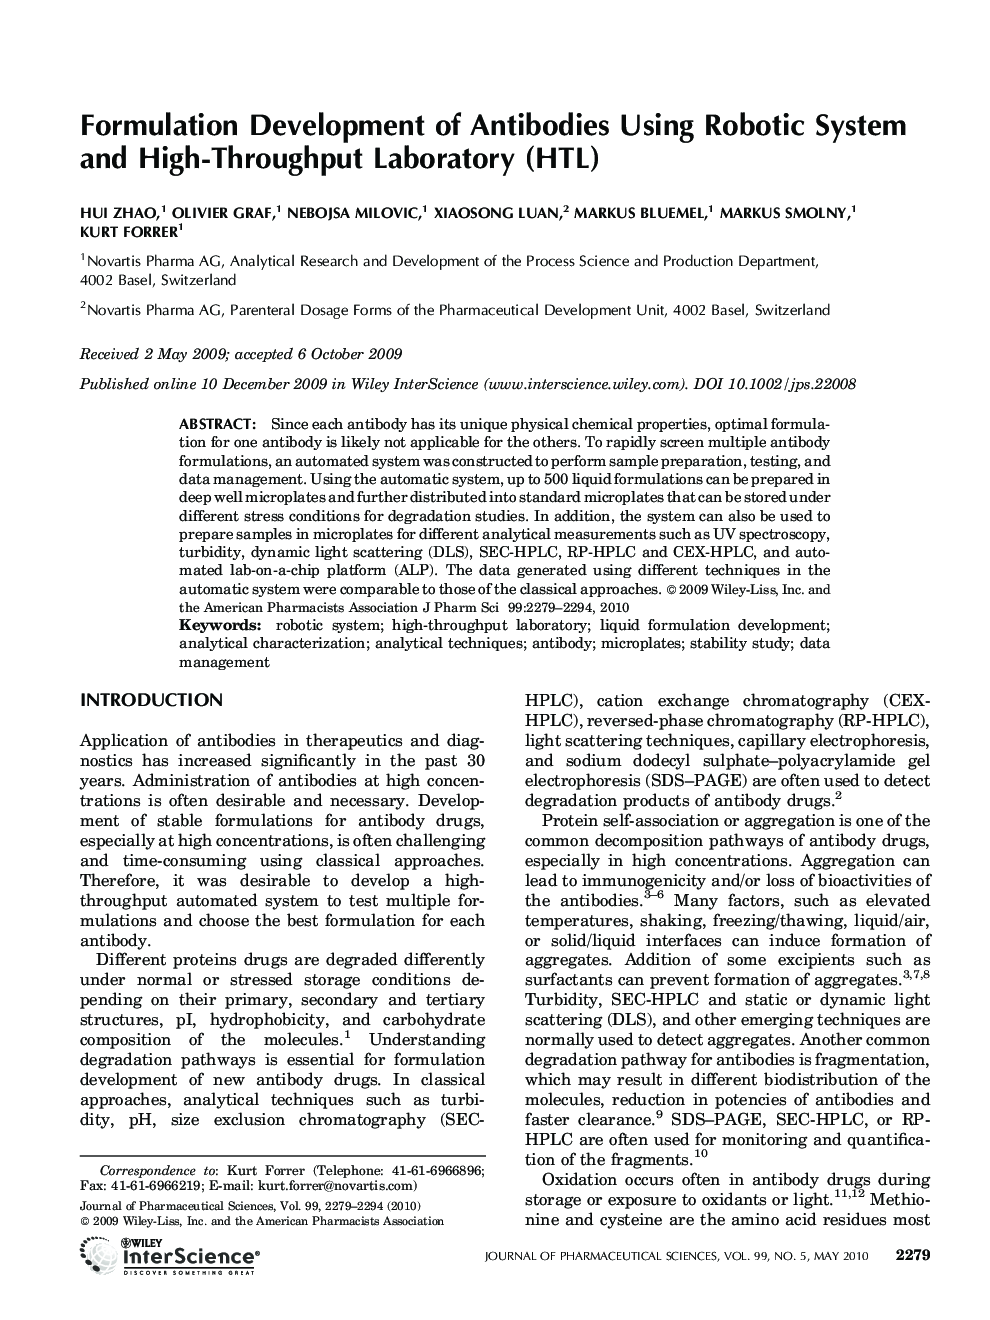 Formulation Development of Antibodies Using Robotic System and High-Throughput Laboratory (HTL)